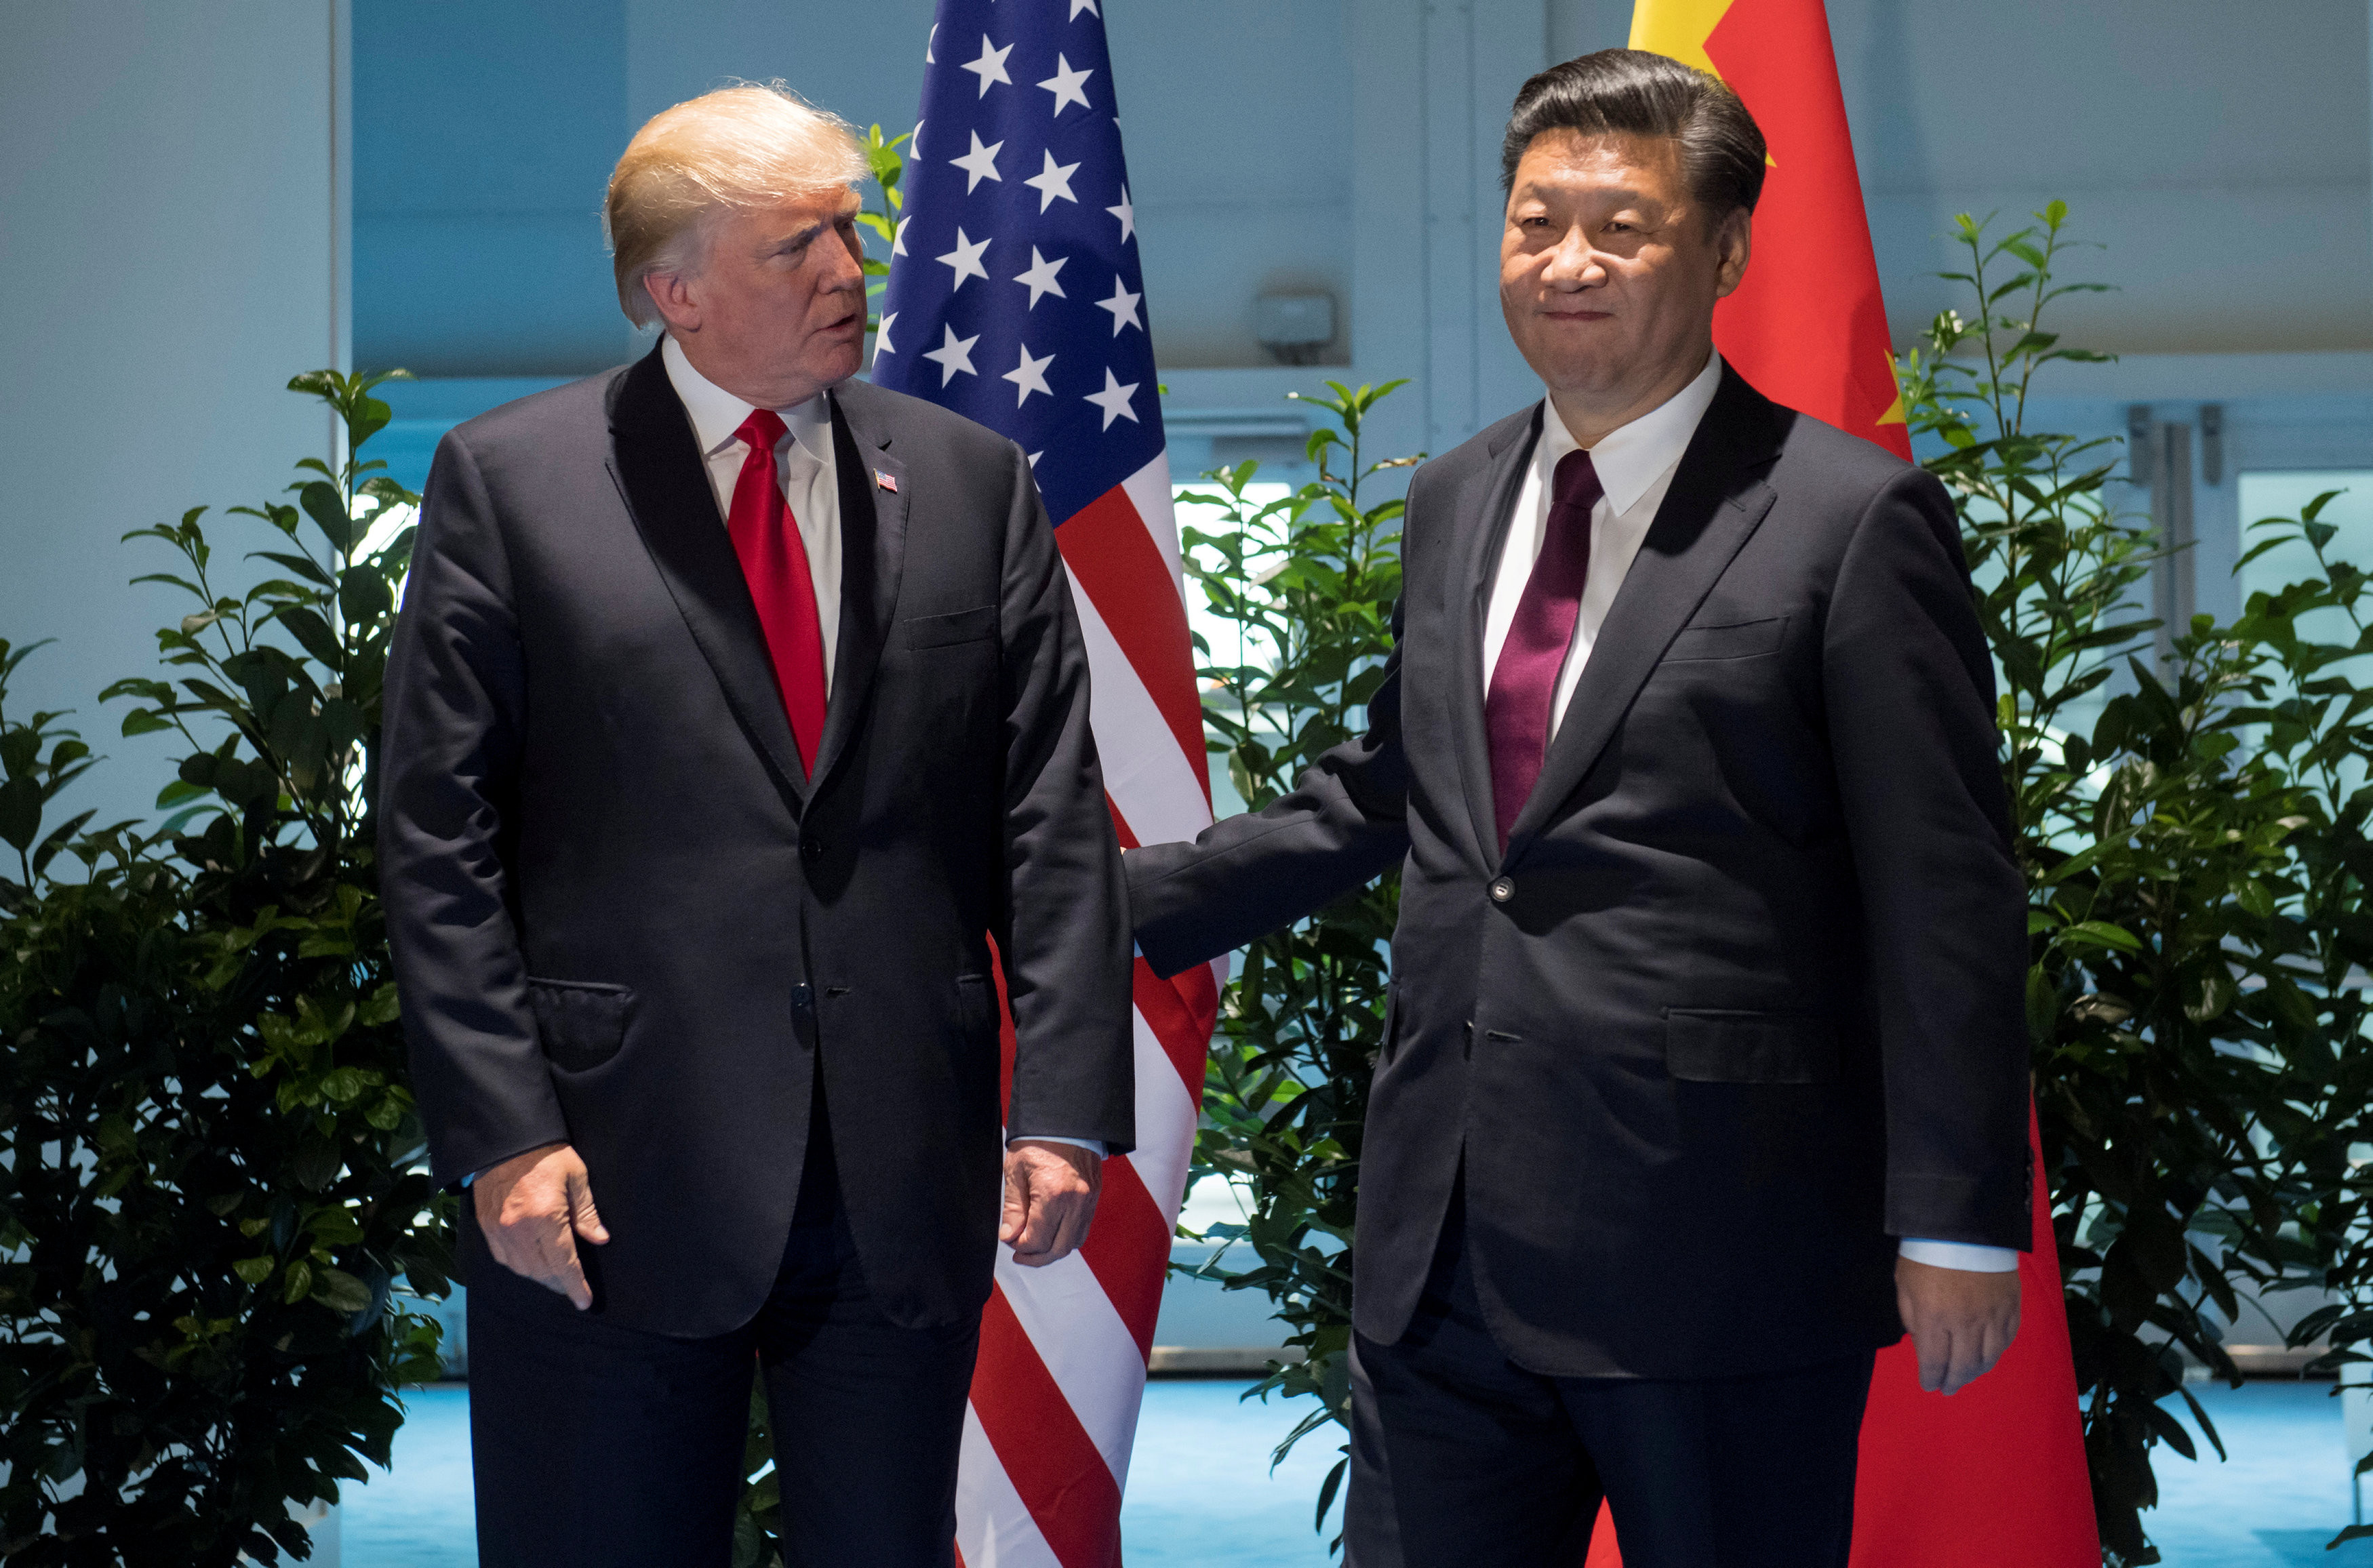 Президент США Дональд Трамп и лидер КНР Си Цзиньпин. Фото: &copy; REUTERS/Saul Loeb